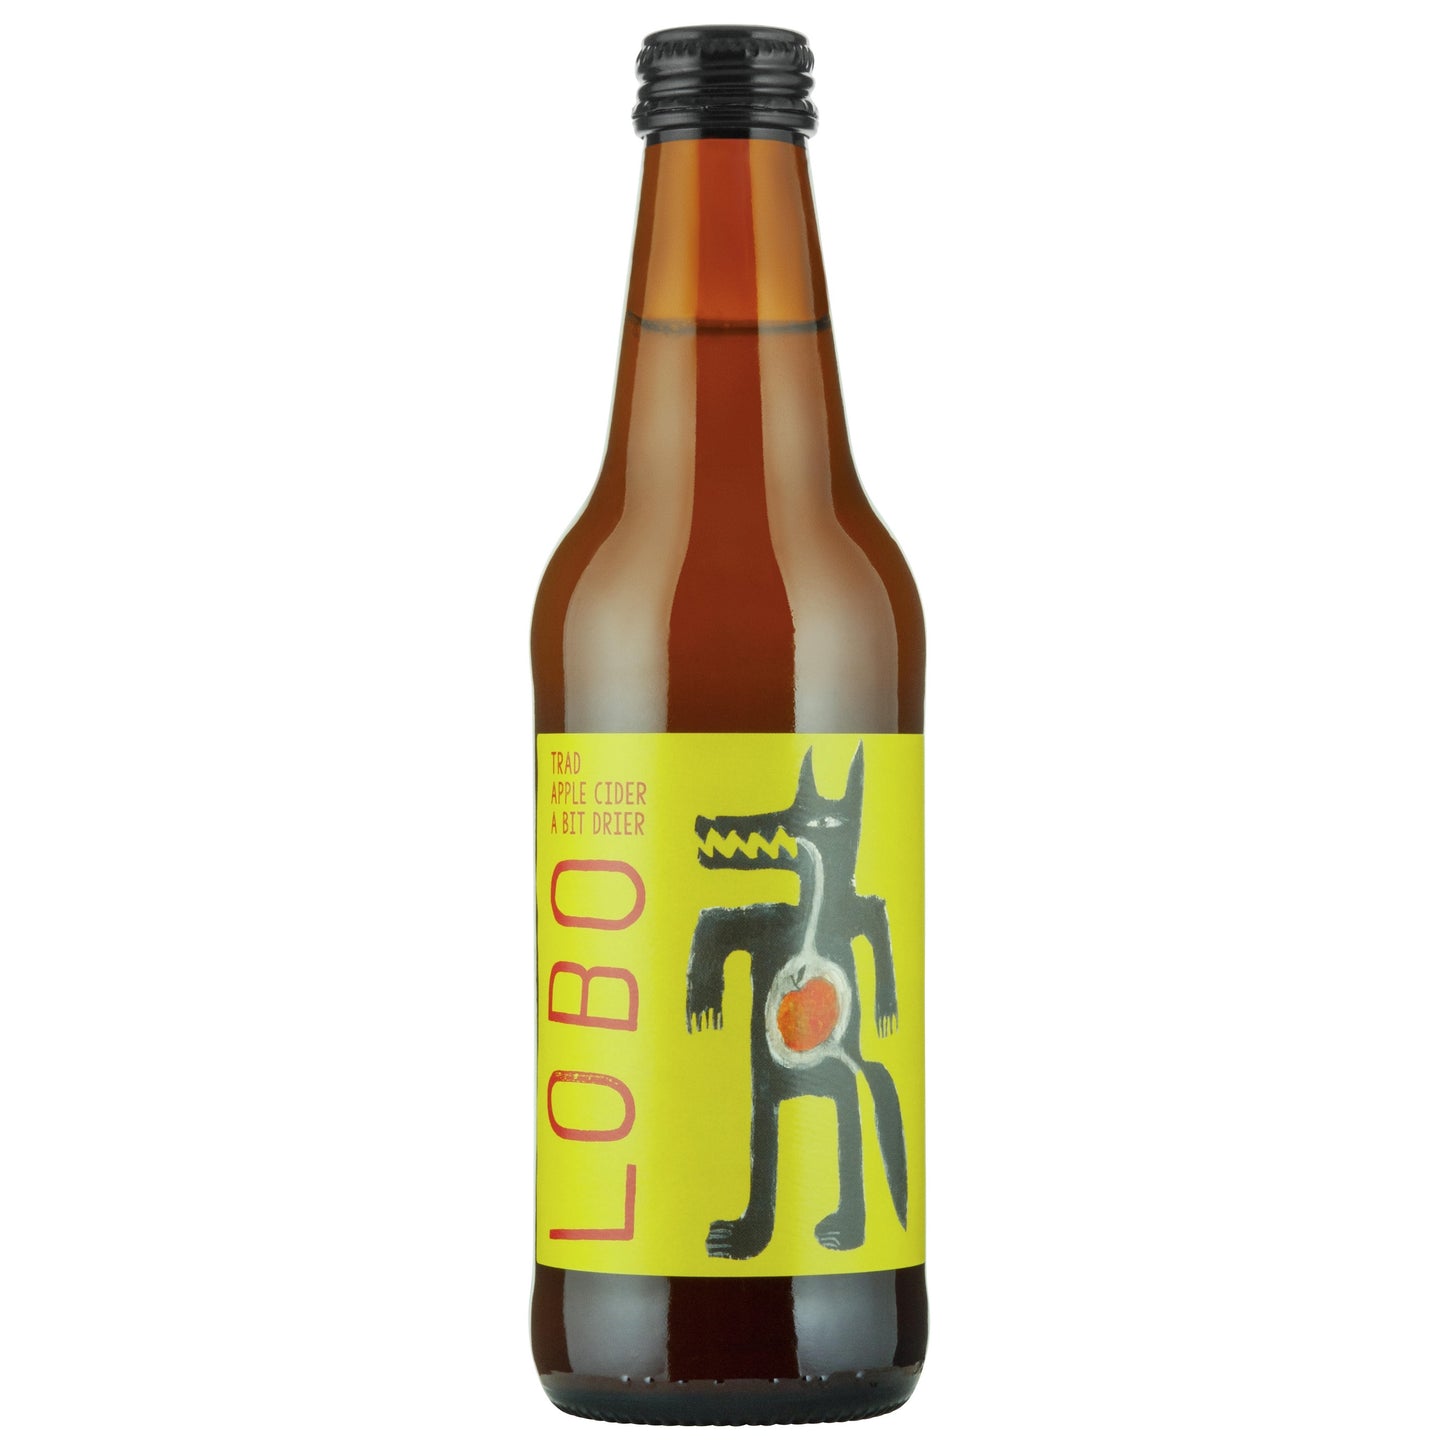 Lobo Traditional Apple Cider - A bit drier - 5.5% - 4x330ML